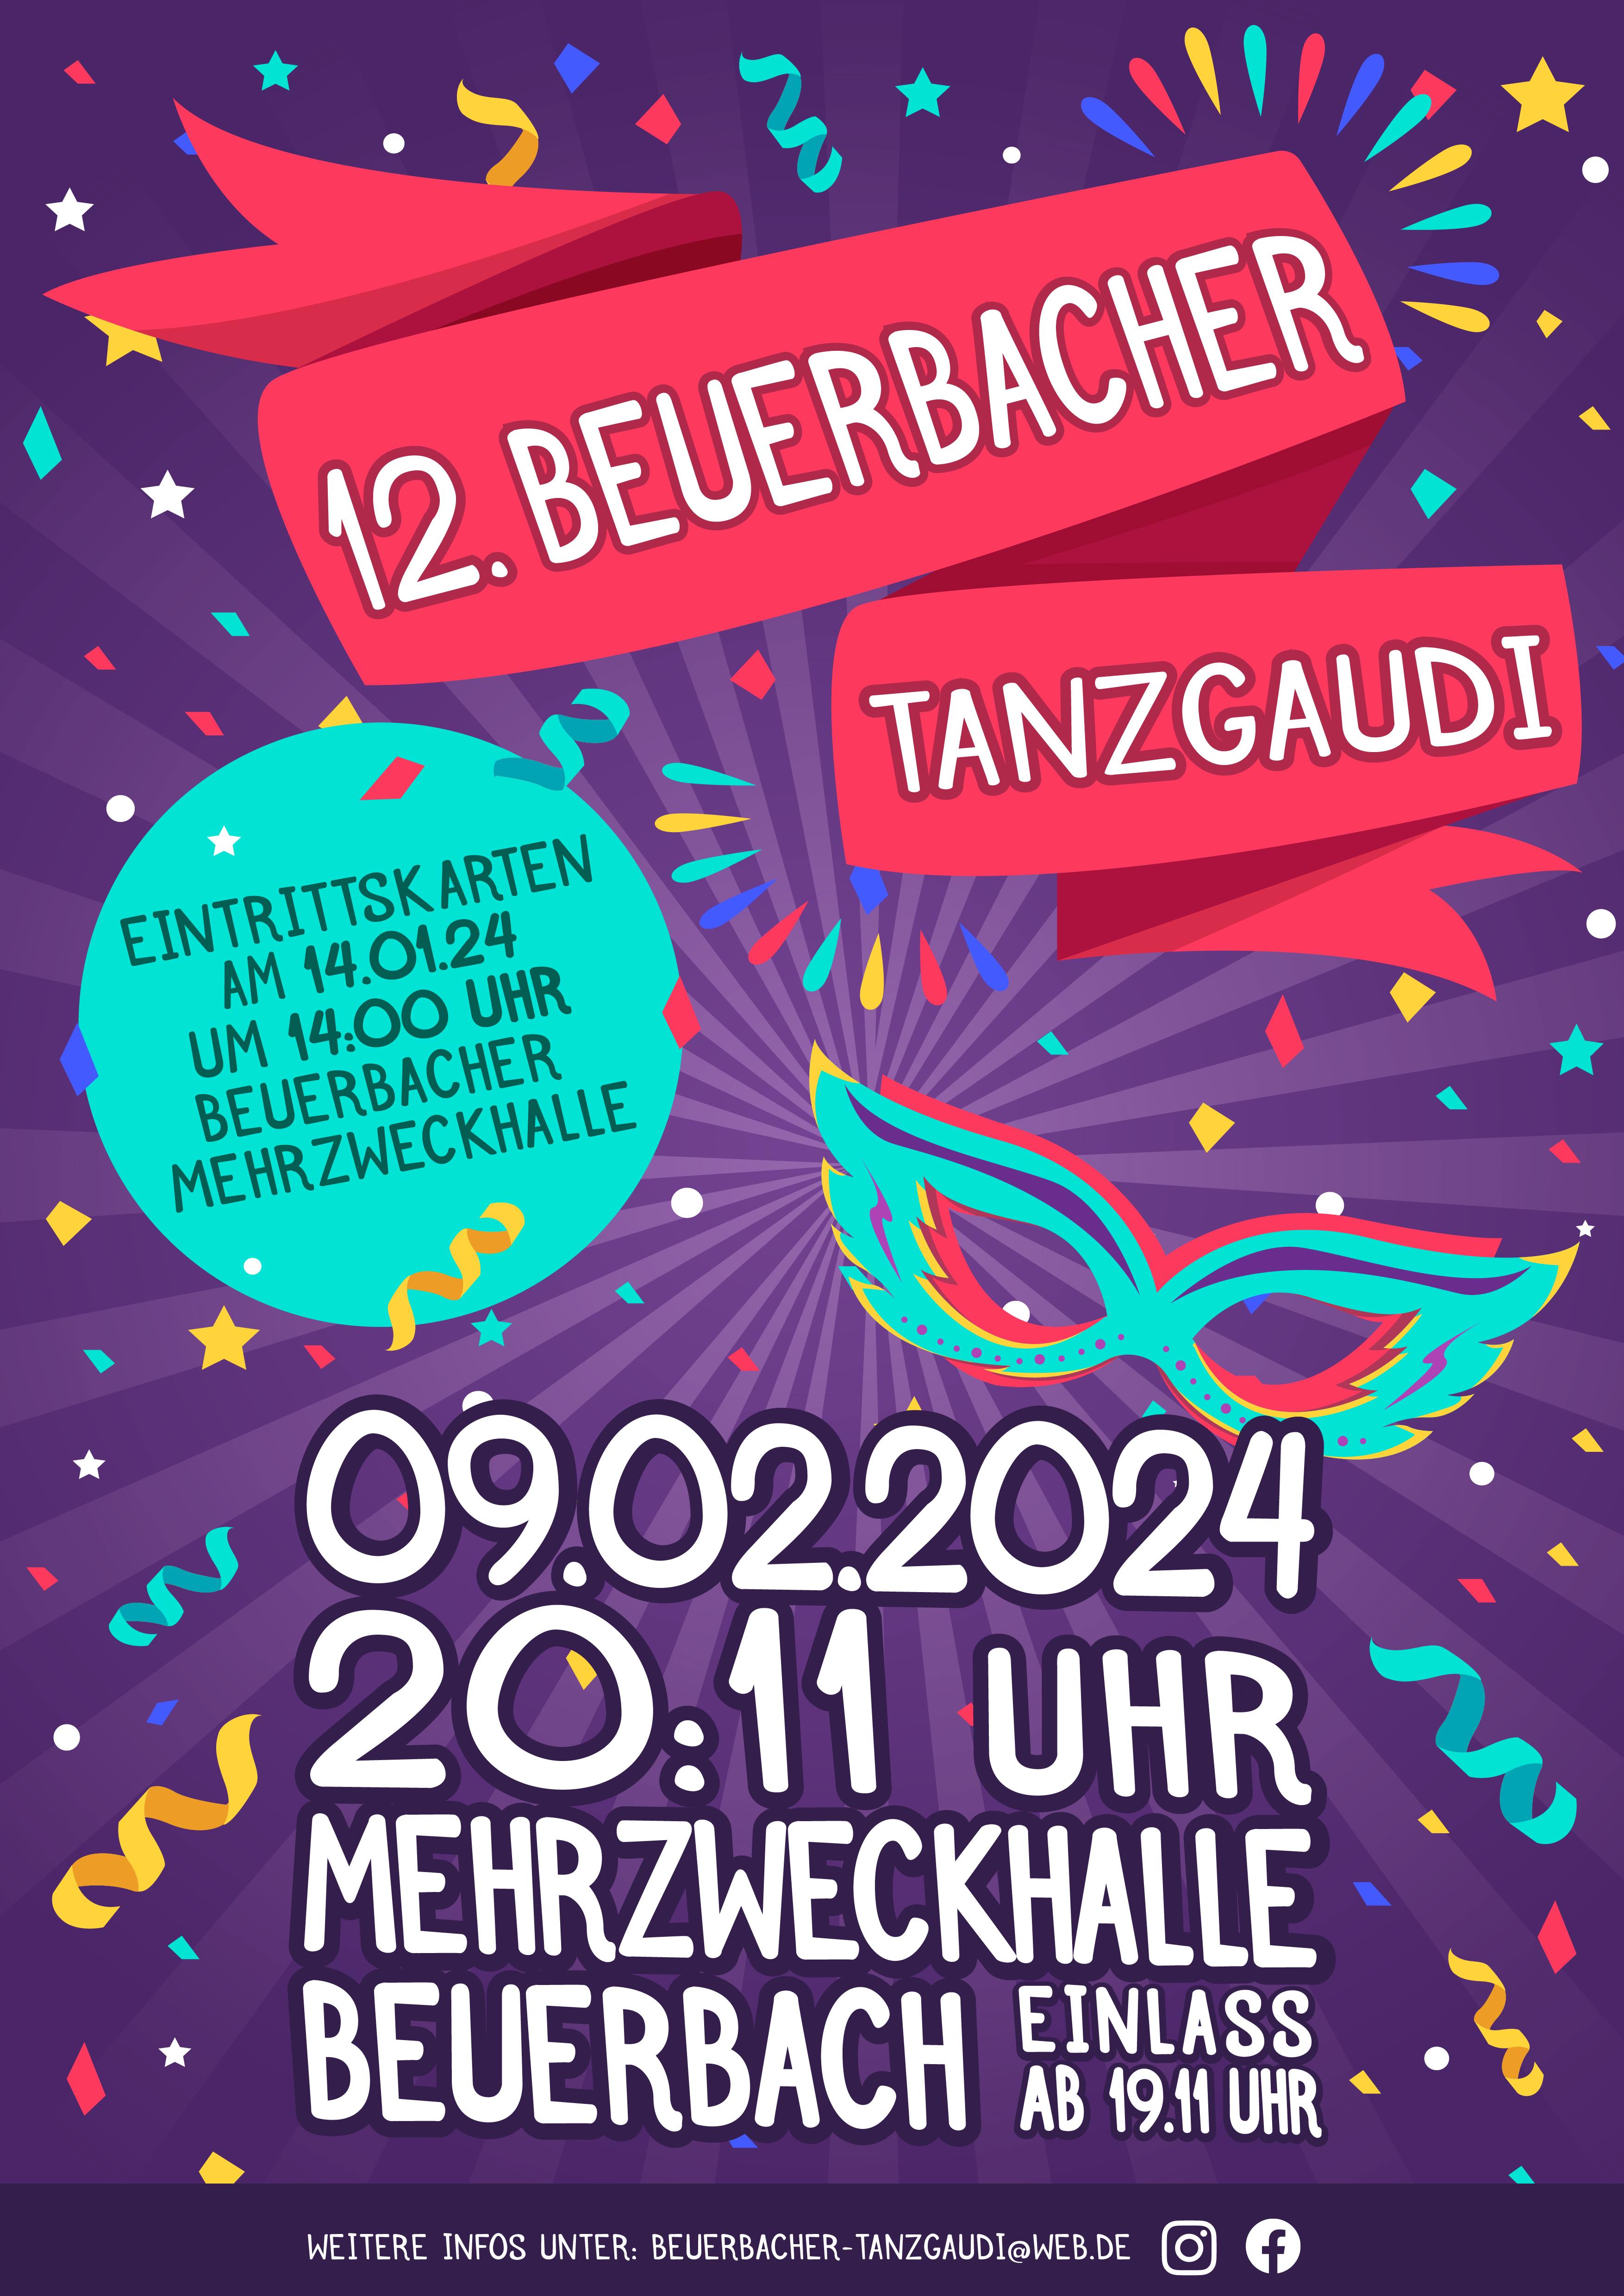 Beuerbacher Tanzgaudi am 09.02.2024